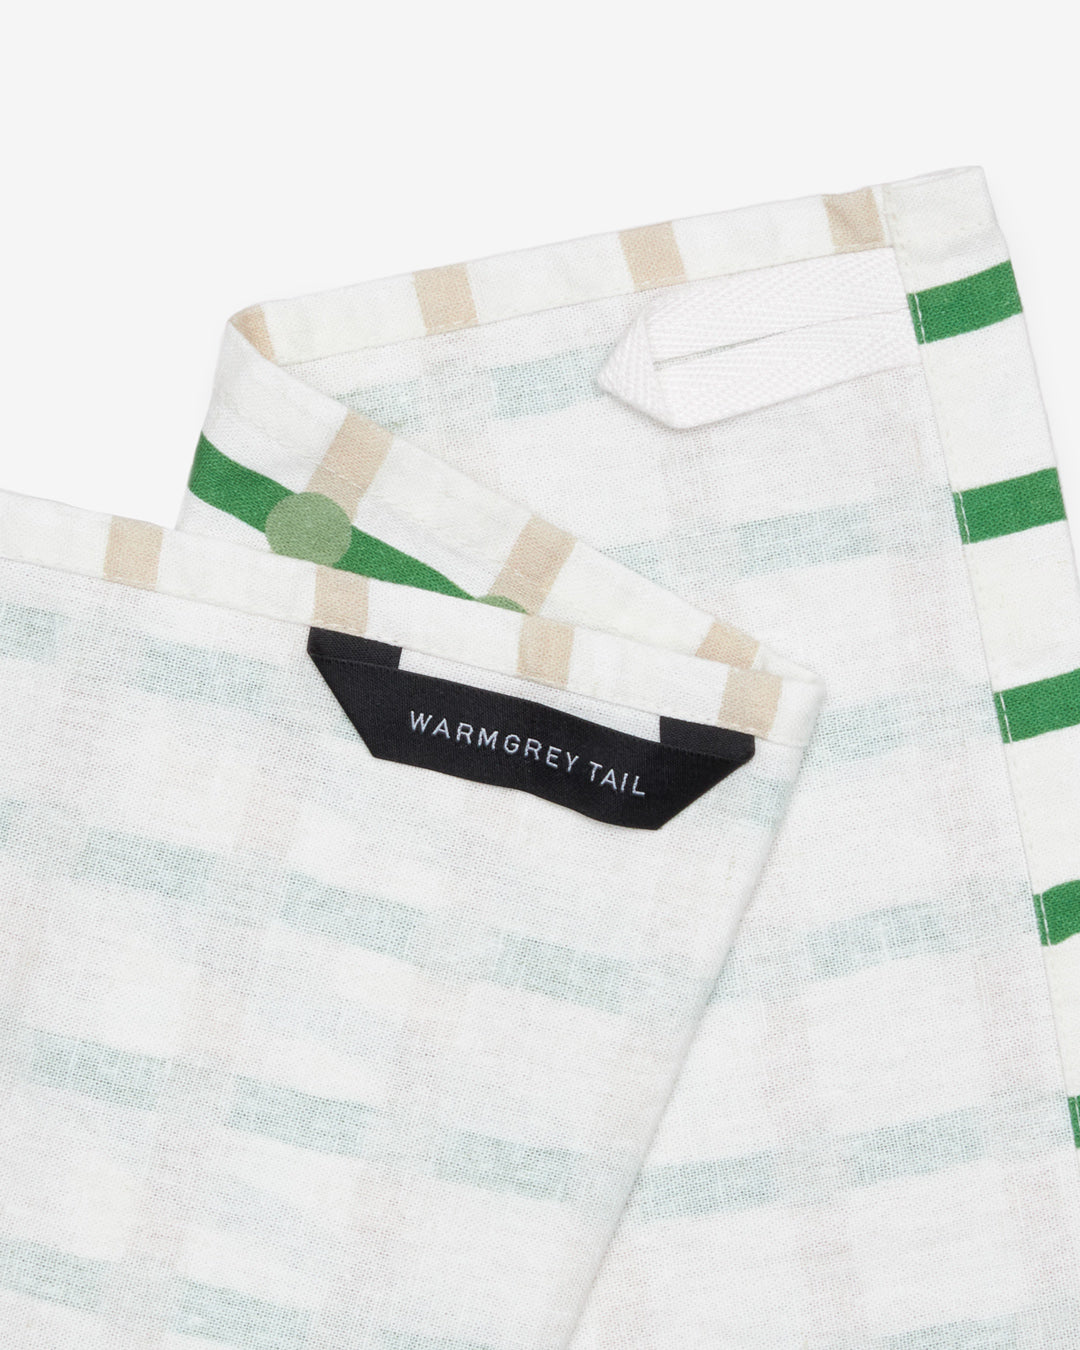 DOT CHECK KITCHEN CLOTH - PALE GREEN ON WHITE